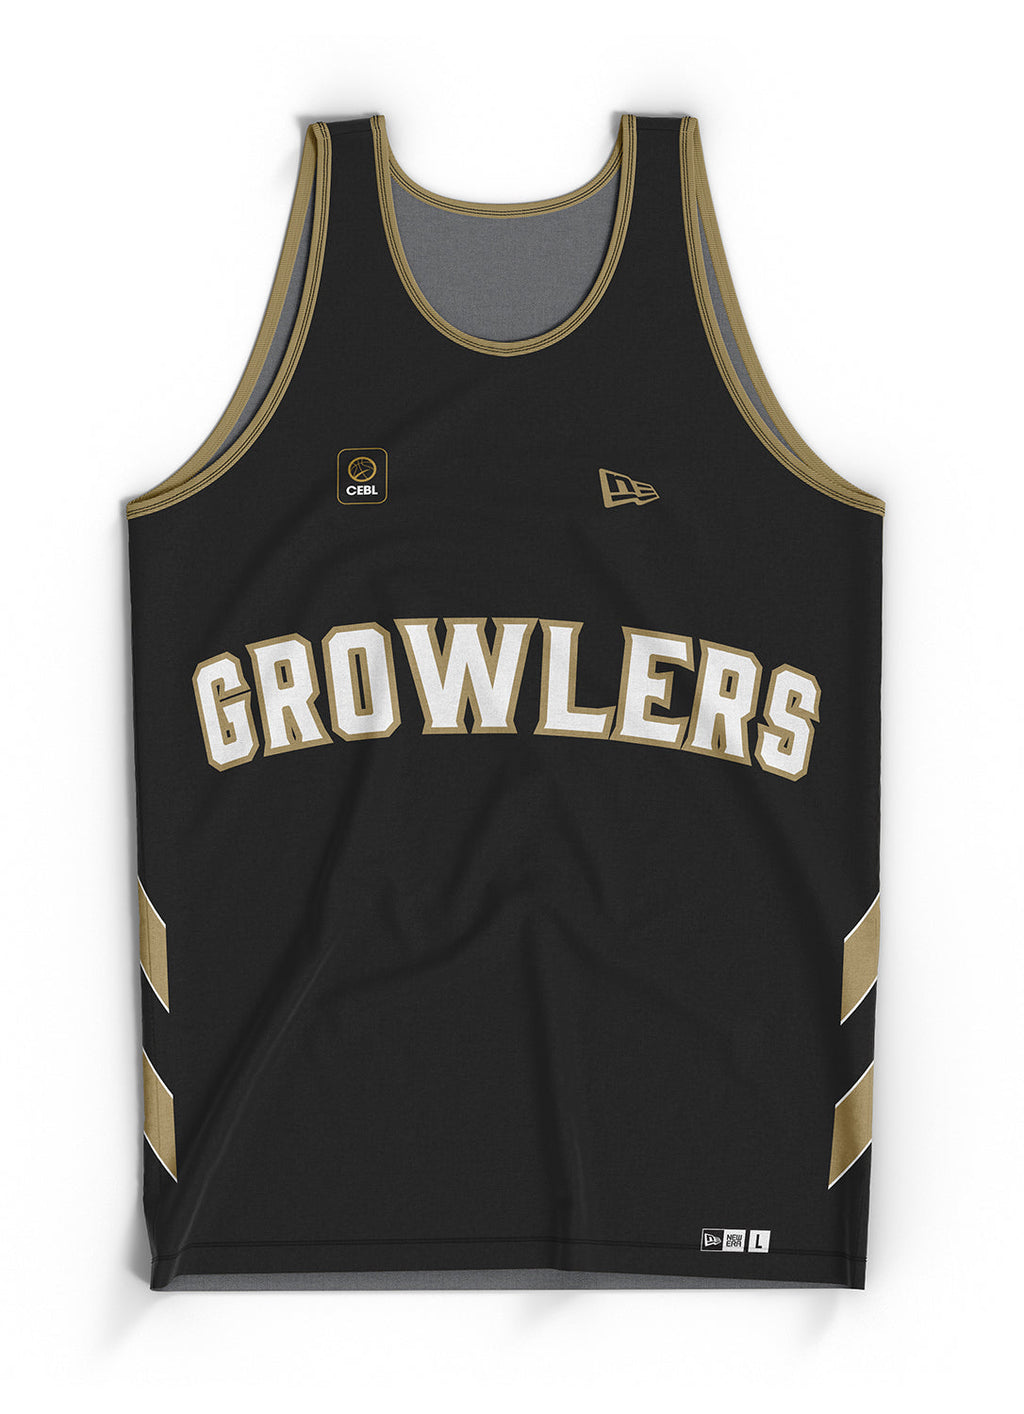 NE Growlers Basketball Dark Replica Jersey Adult